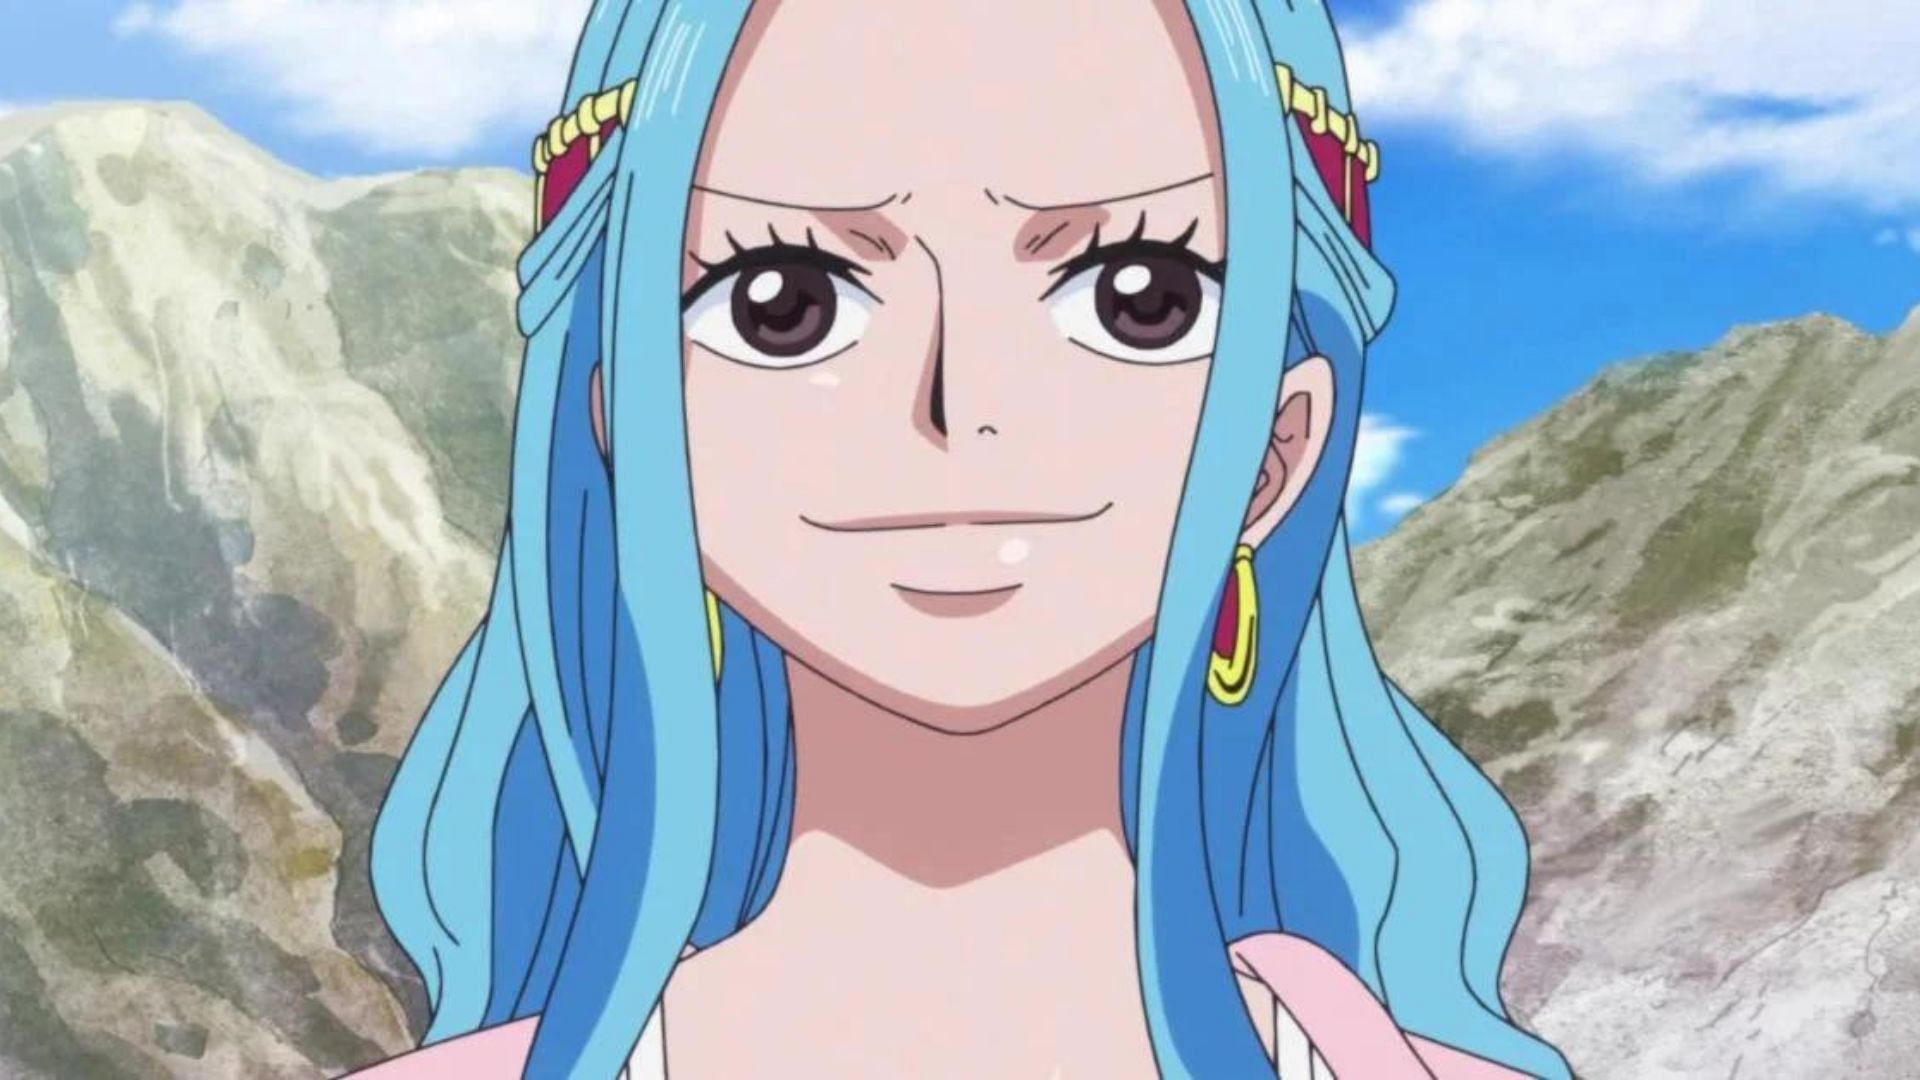 Nerfertari D. Vivi as shown in the anime (Image via Toei Animation)